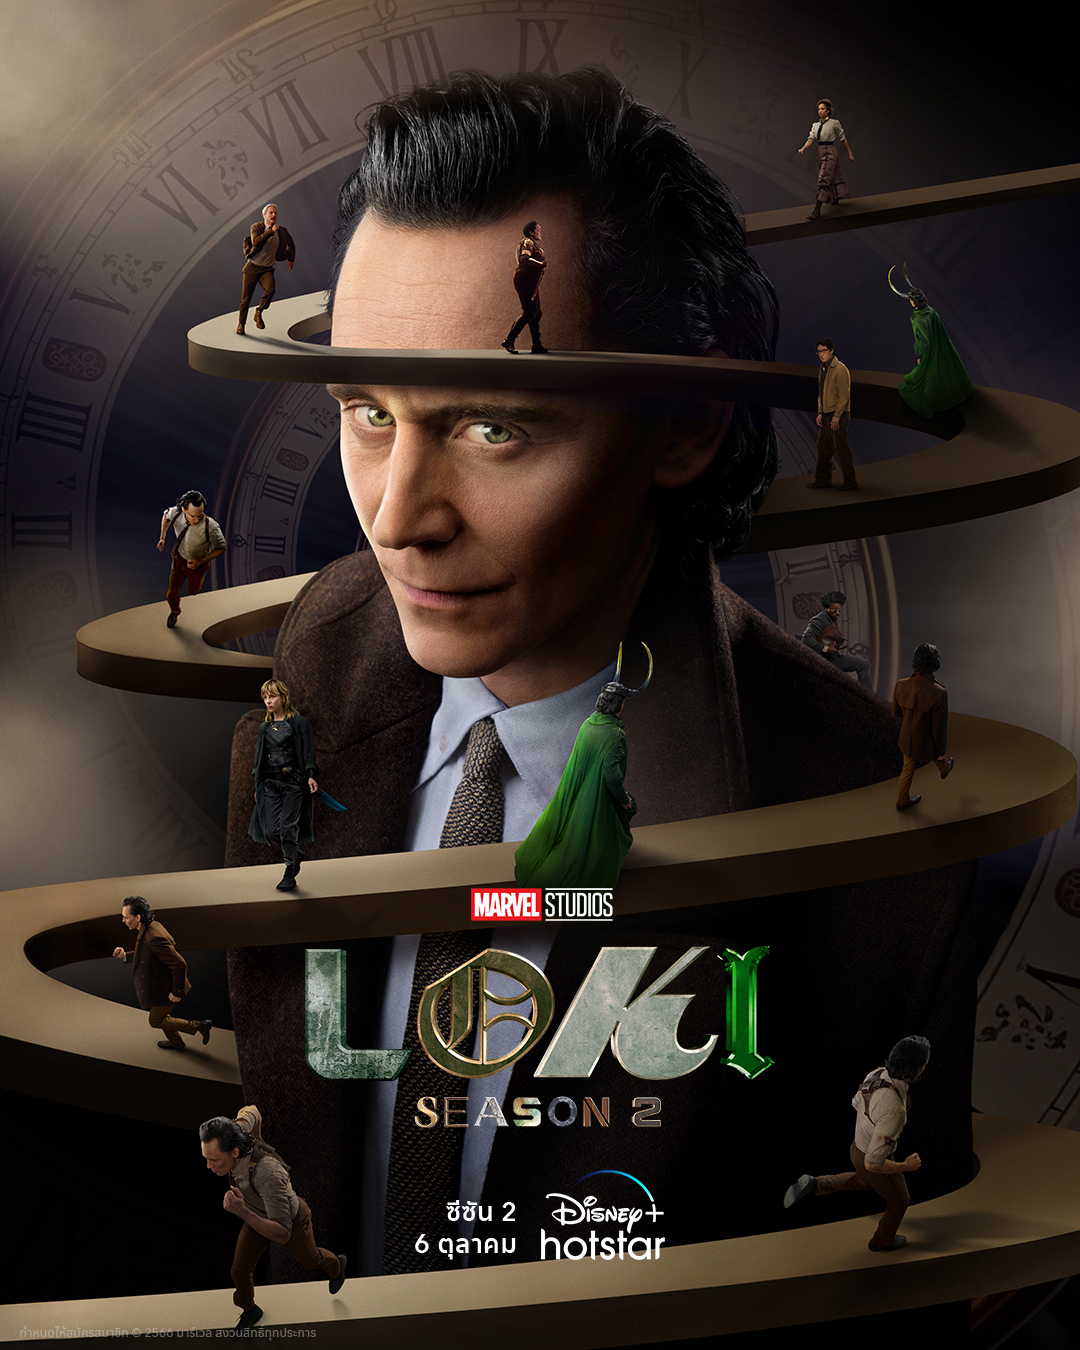 Marvel Studios’ Loki Season 2 (6 ตุลาคม)